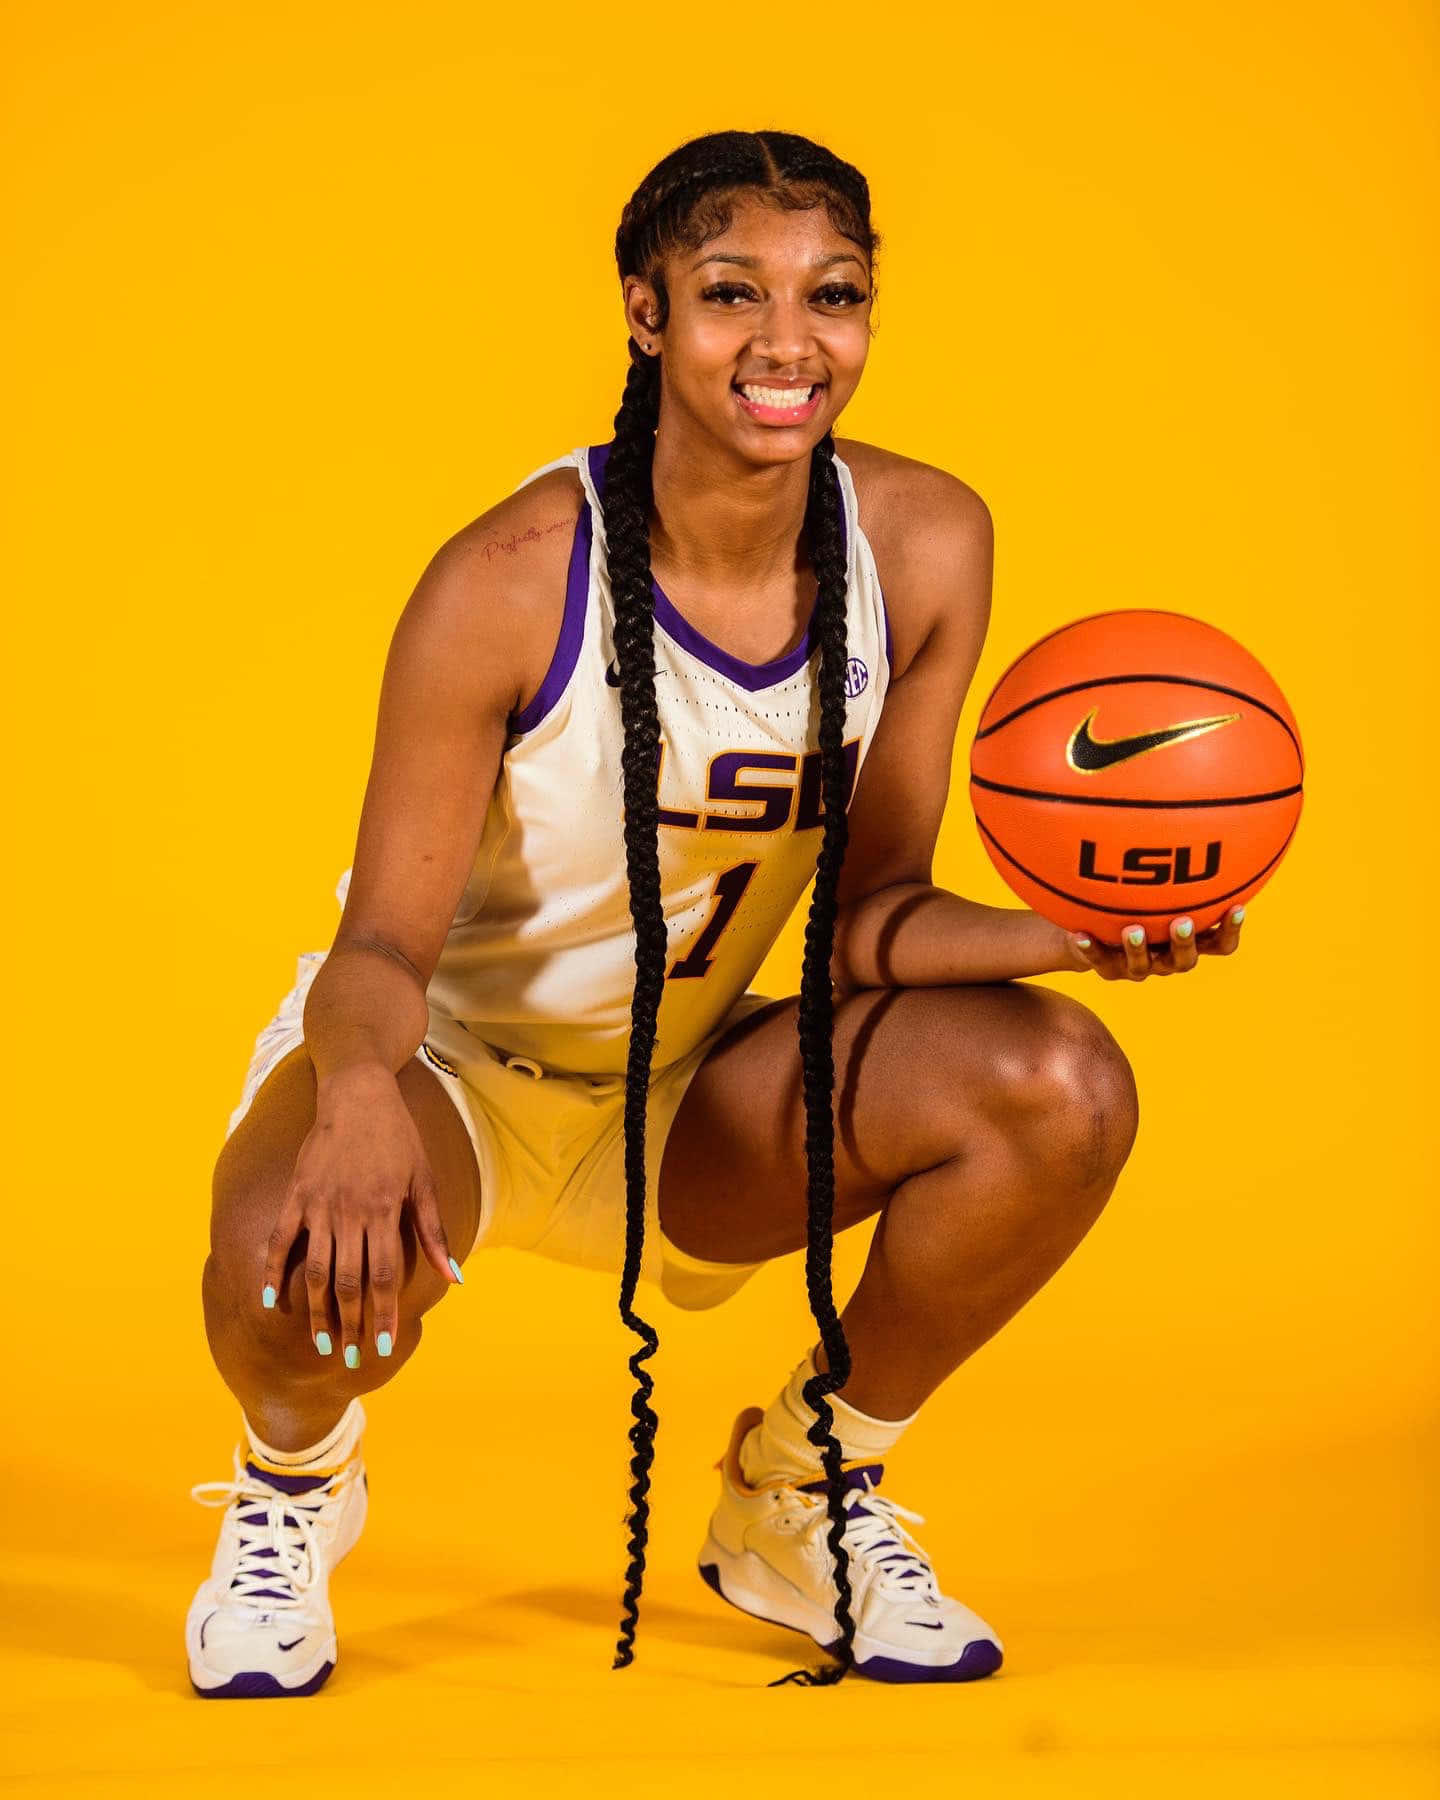 L S U Womens Basketball Player Portrait Wallpaper